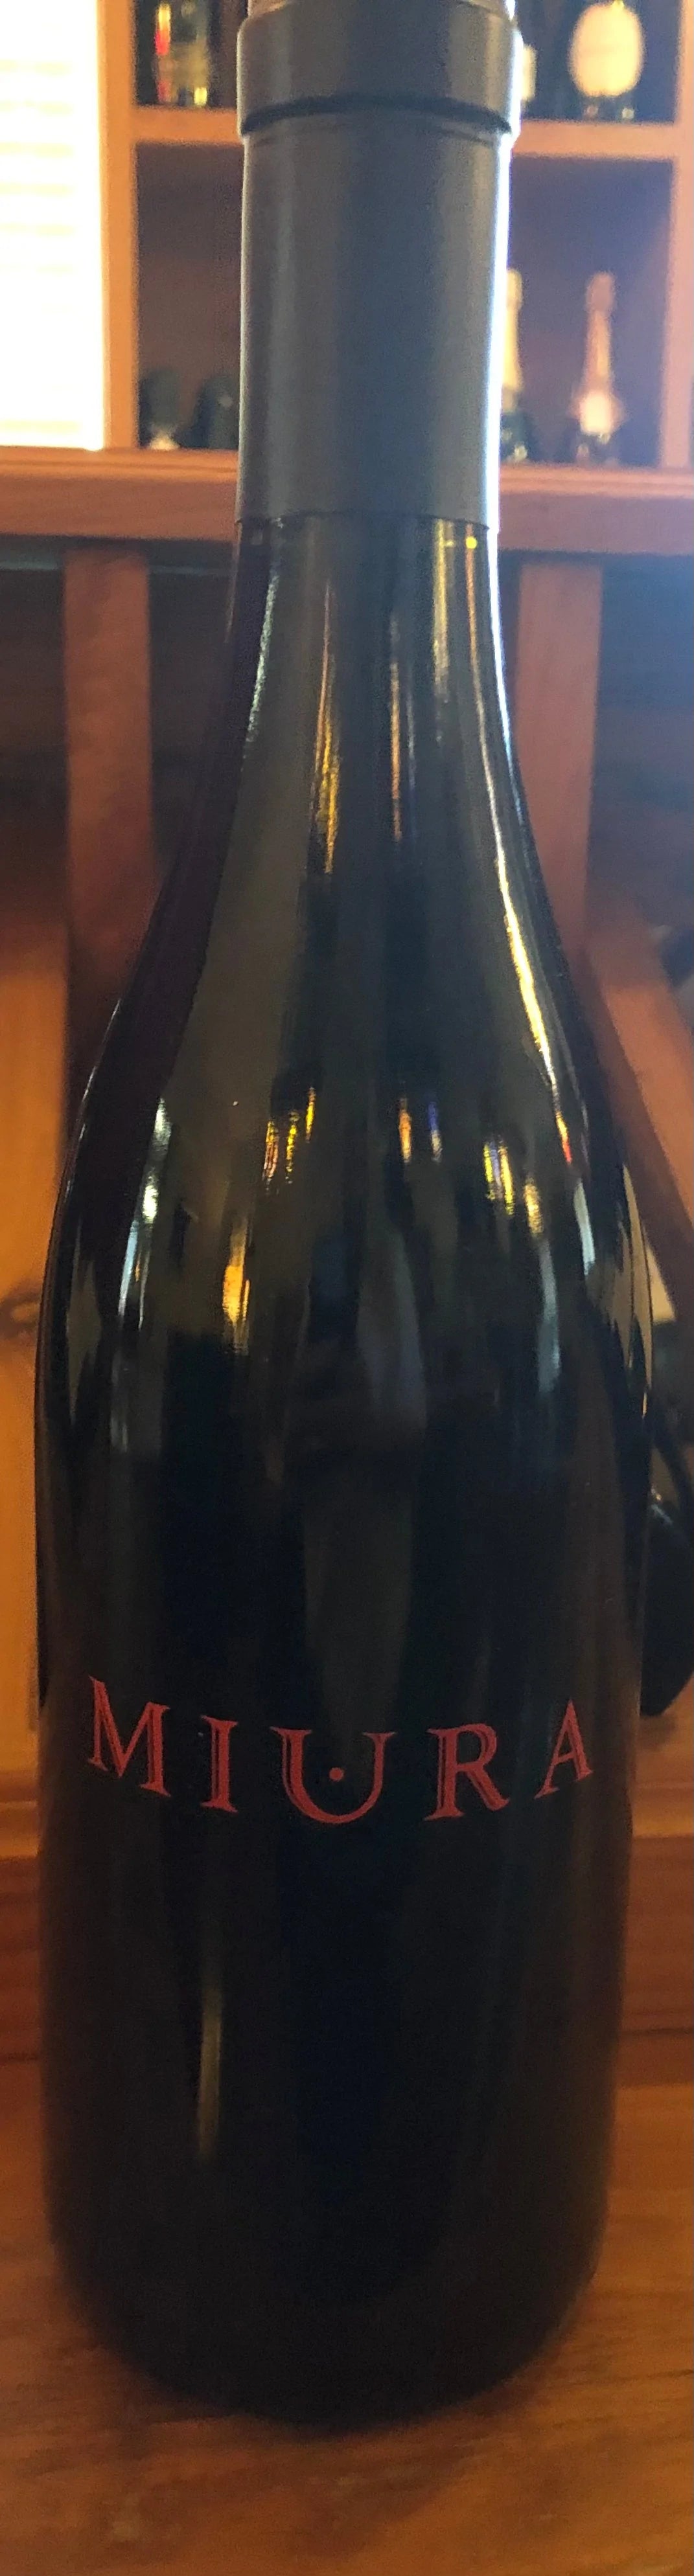 Pinnacle Imports Miura Monterey Pinot Noir